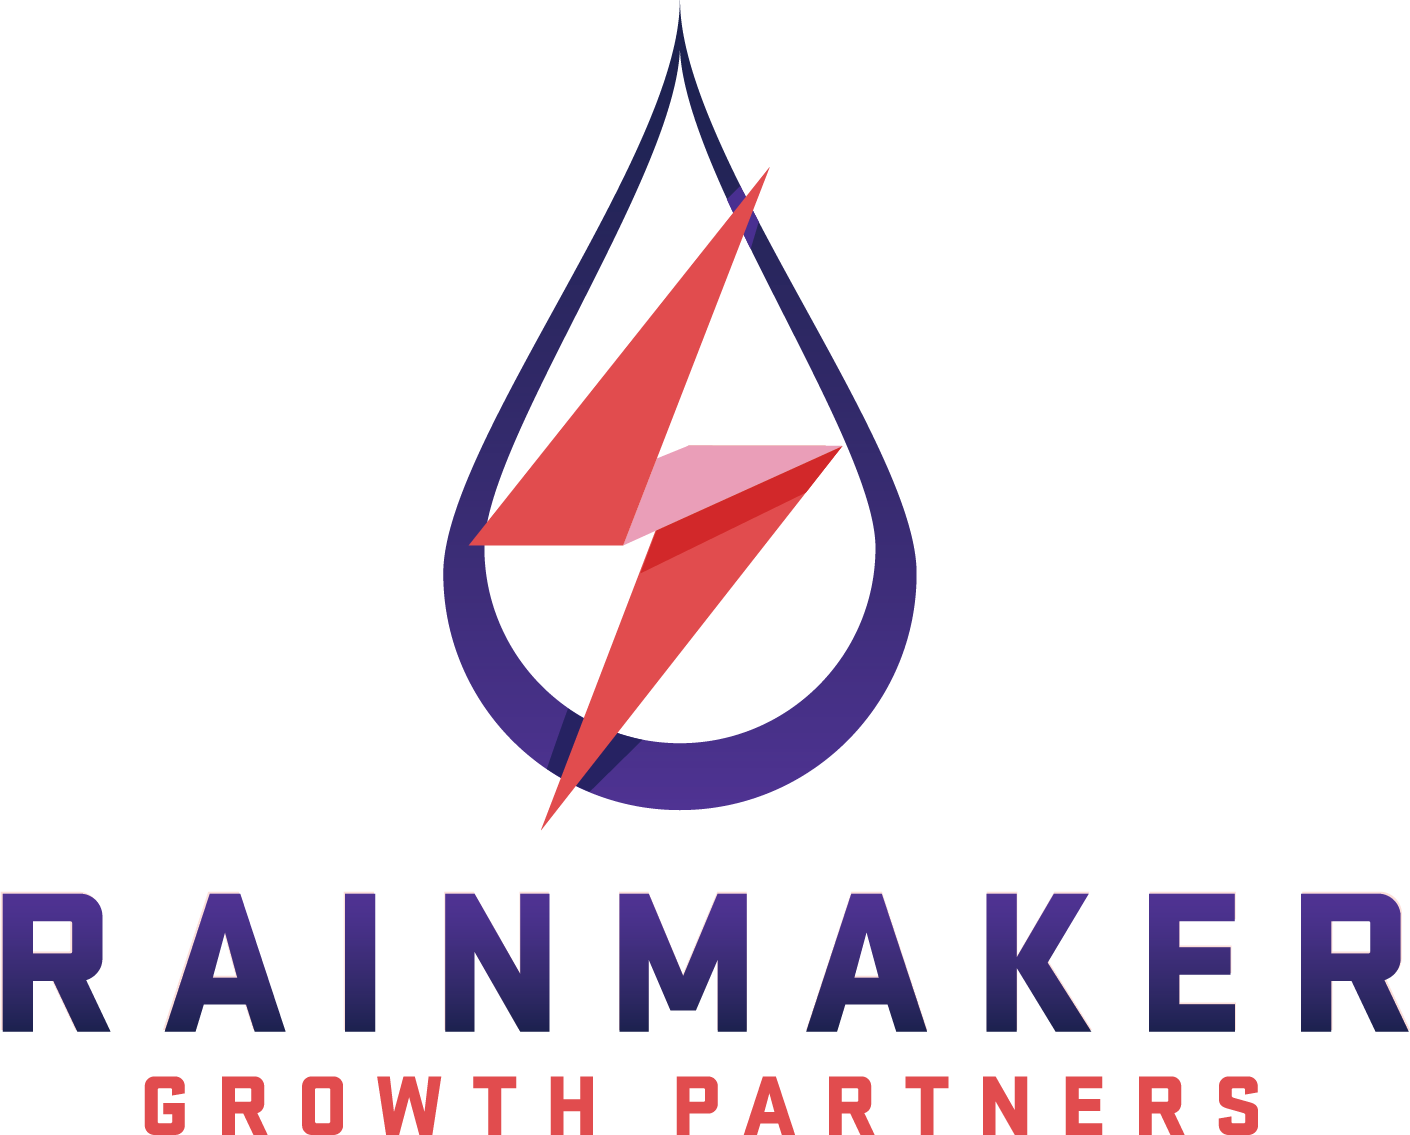 Rainmaker Growth Partners